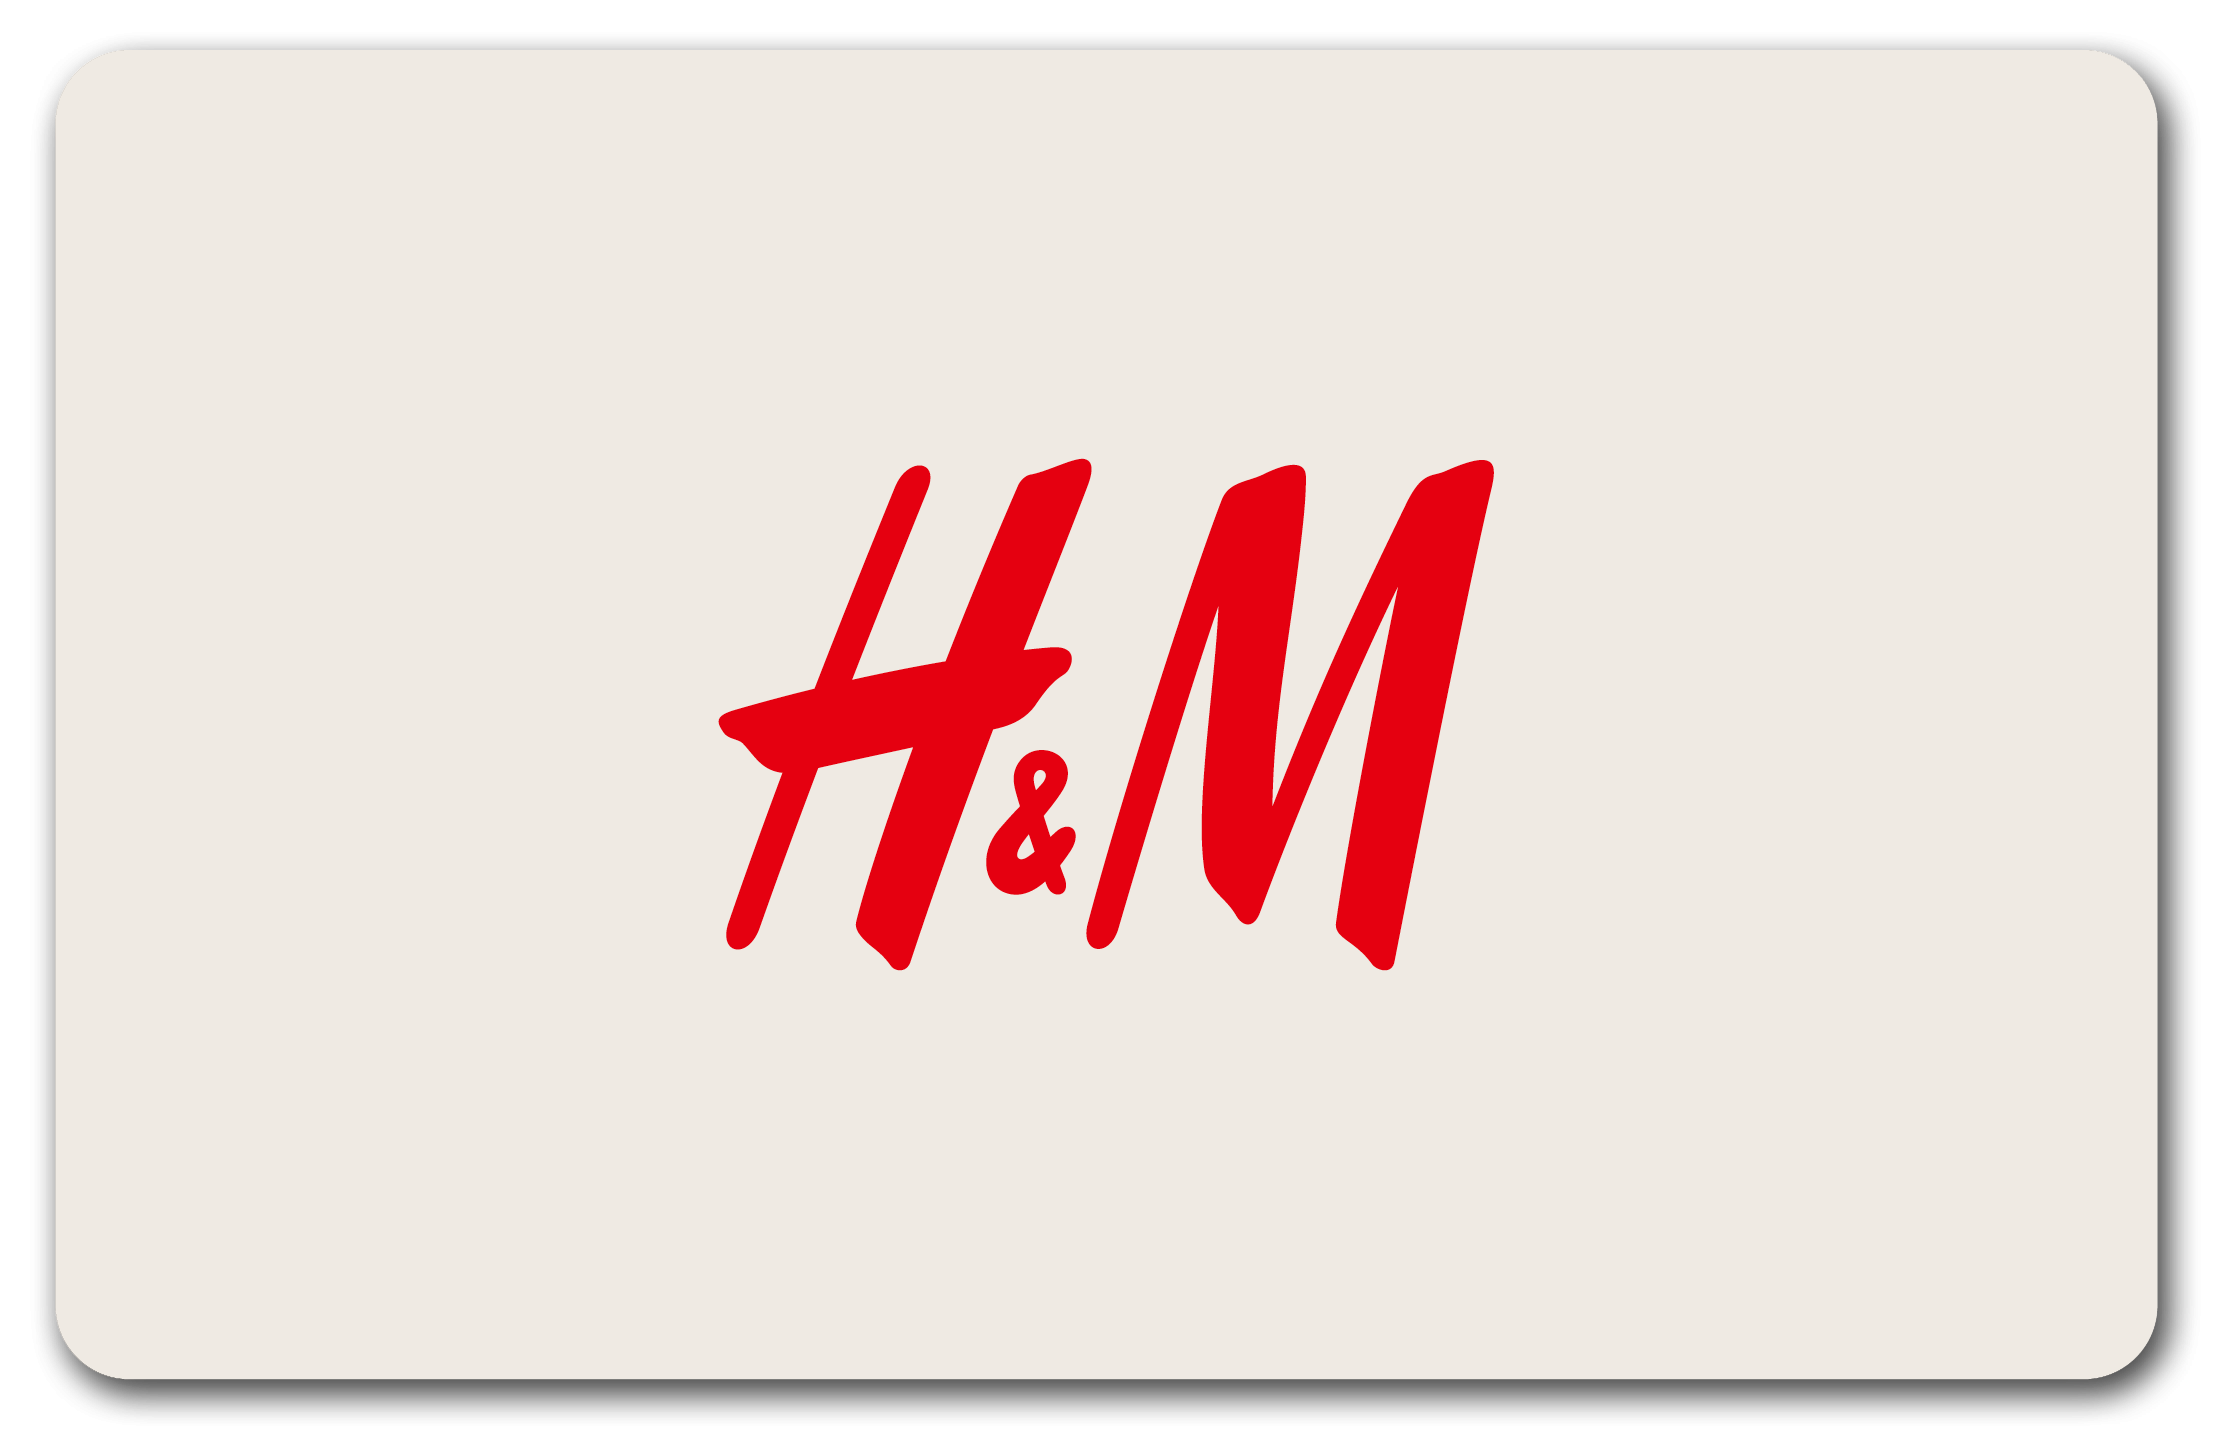 H&M Avignon